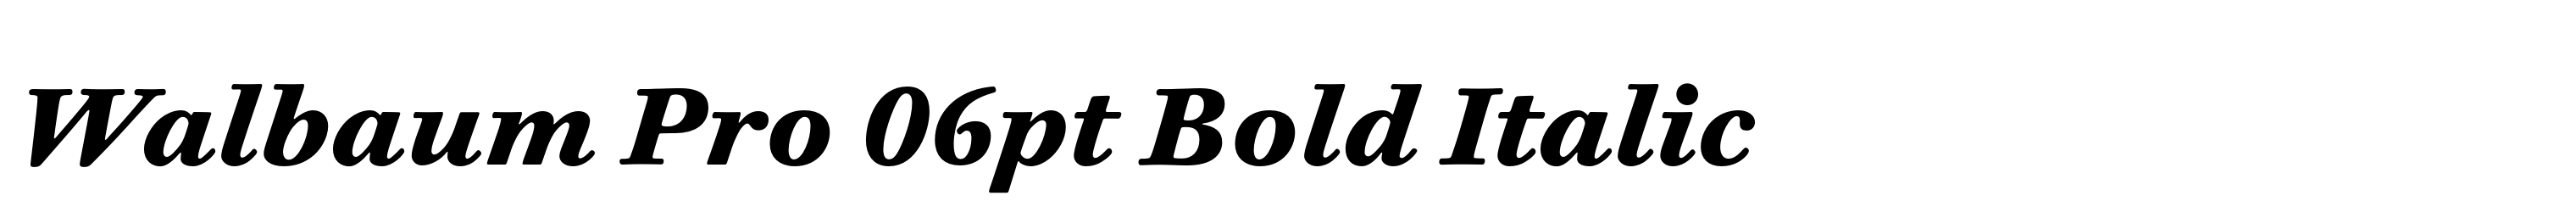 Walbaum Pro 06pt Bold Italic